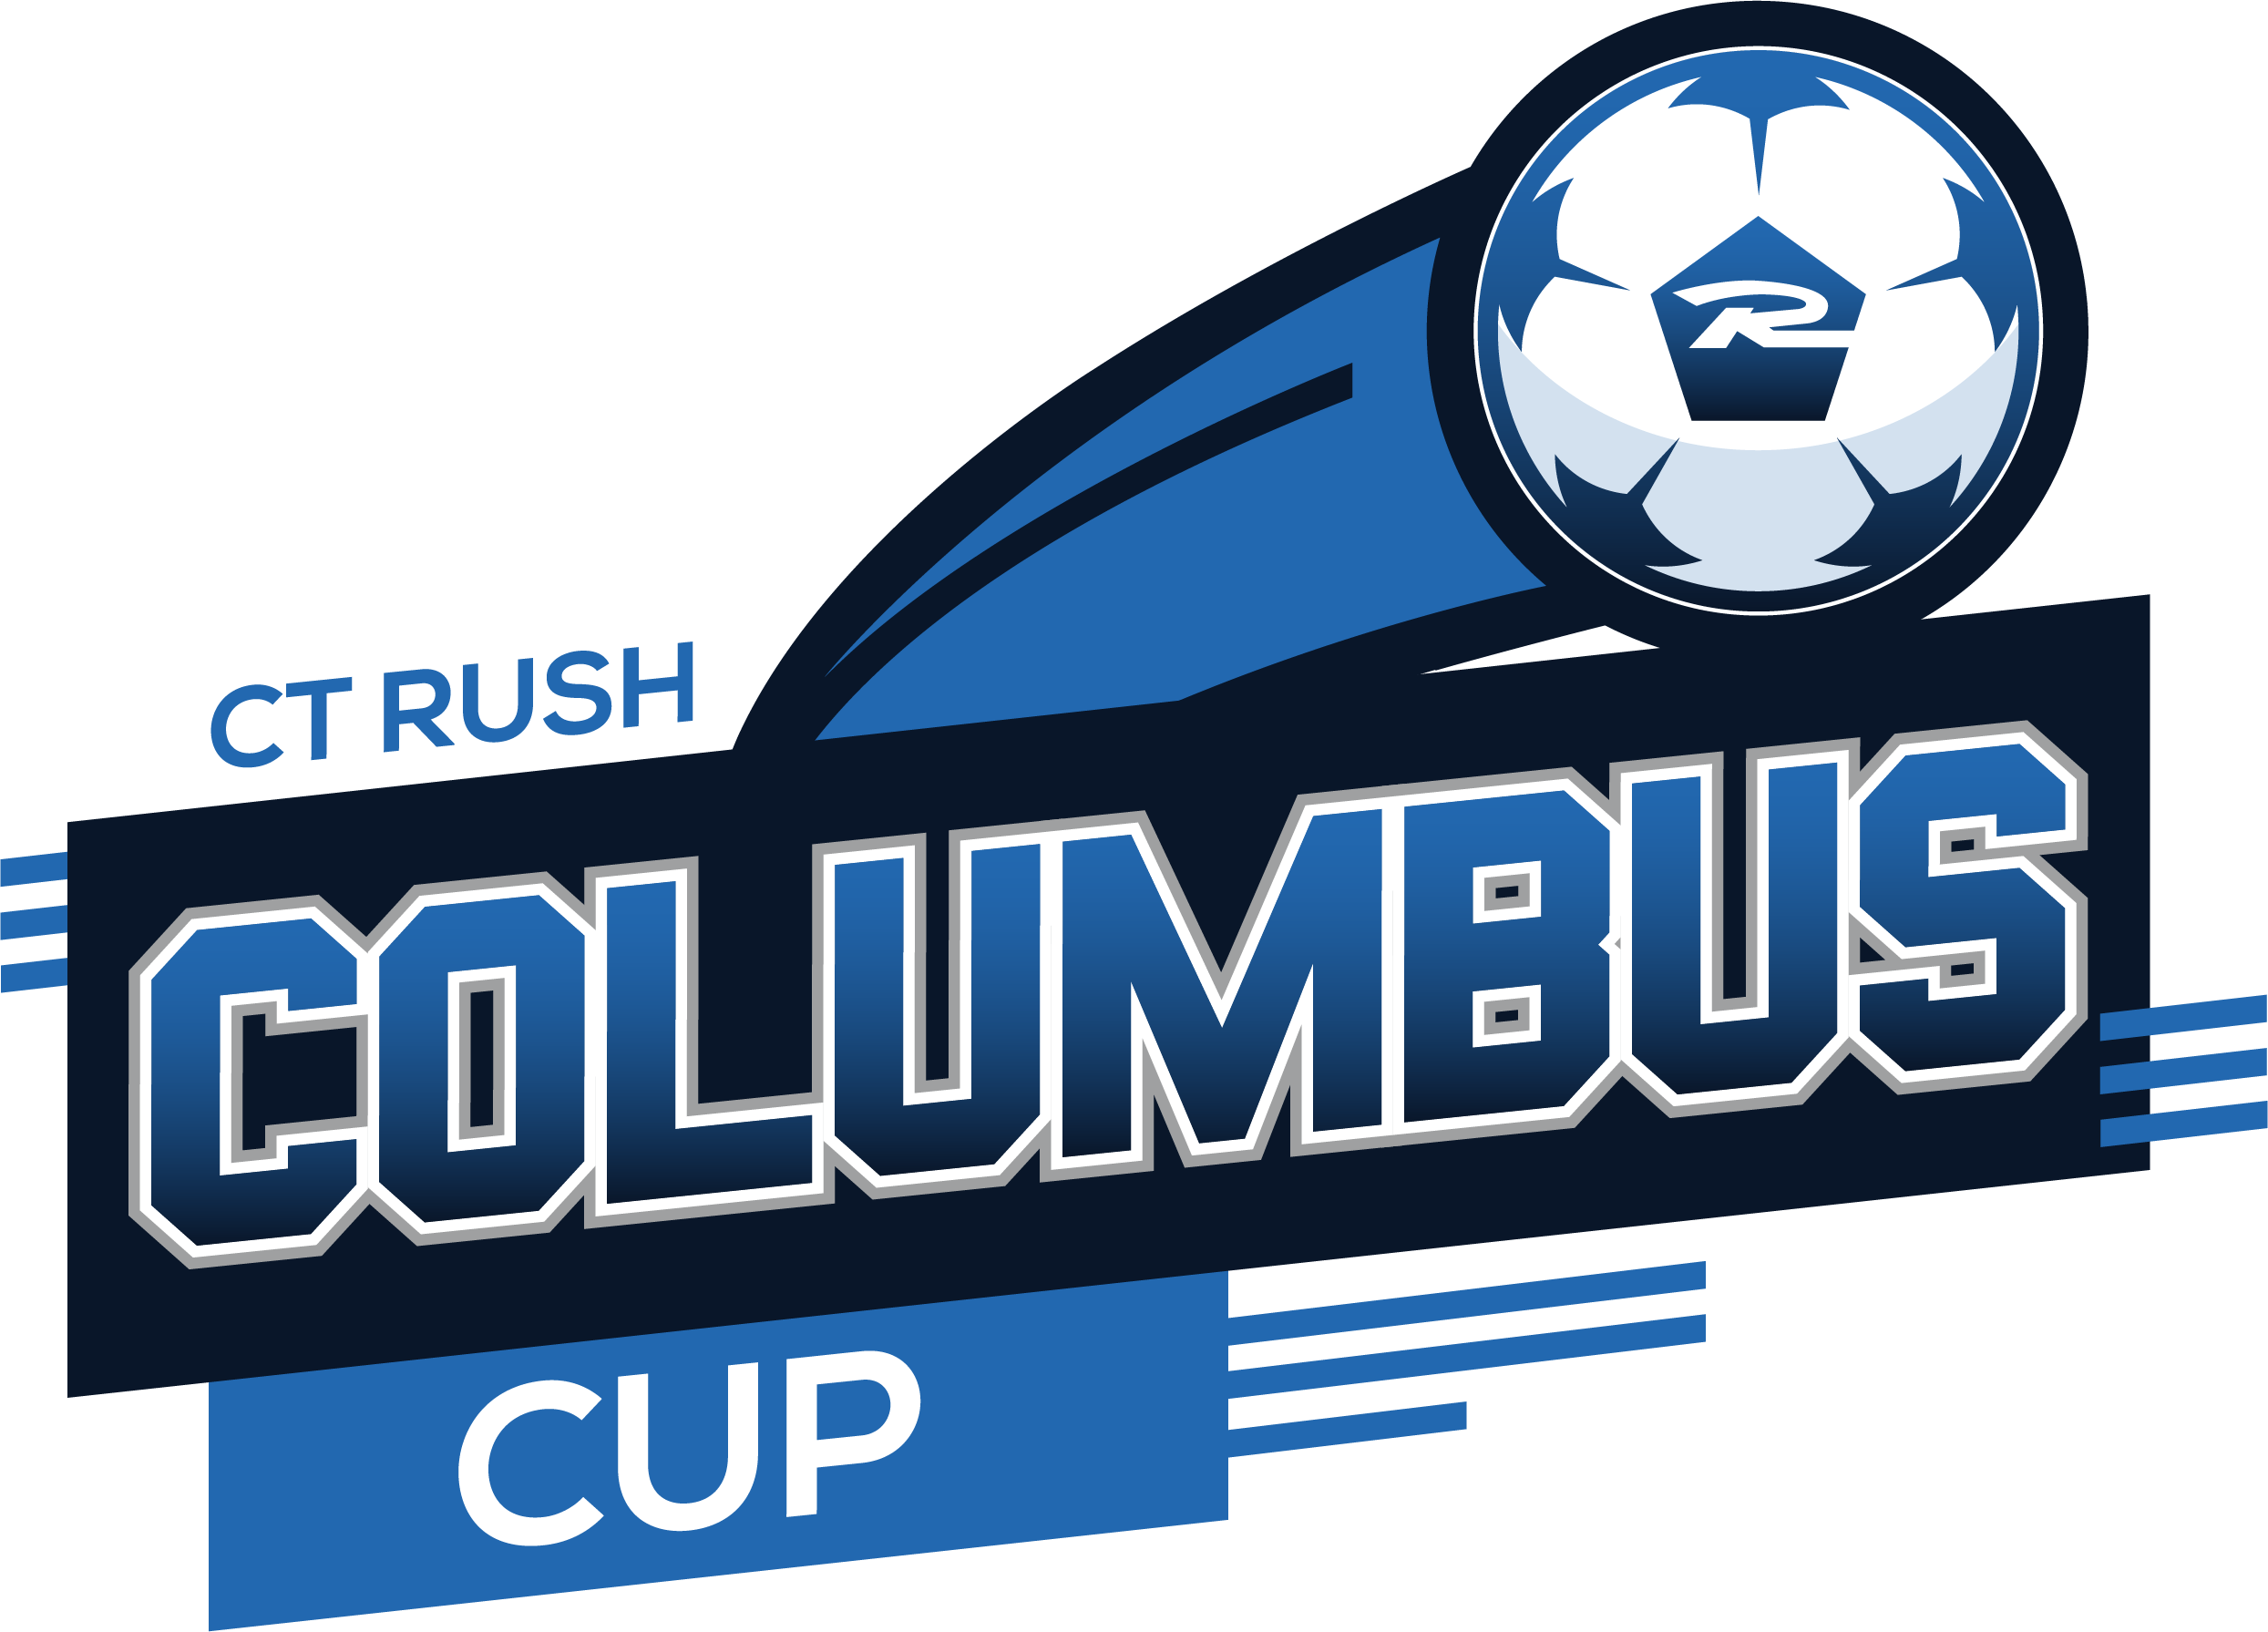 CT RUSH COLUMBUS CUP Northeast Rush Soccer